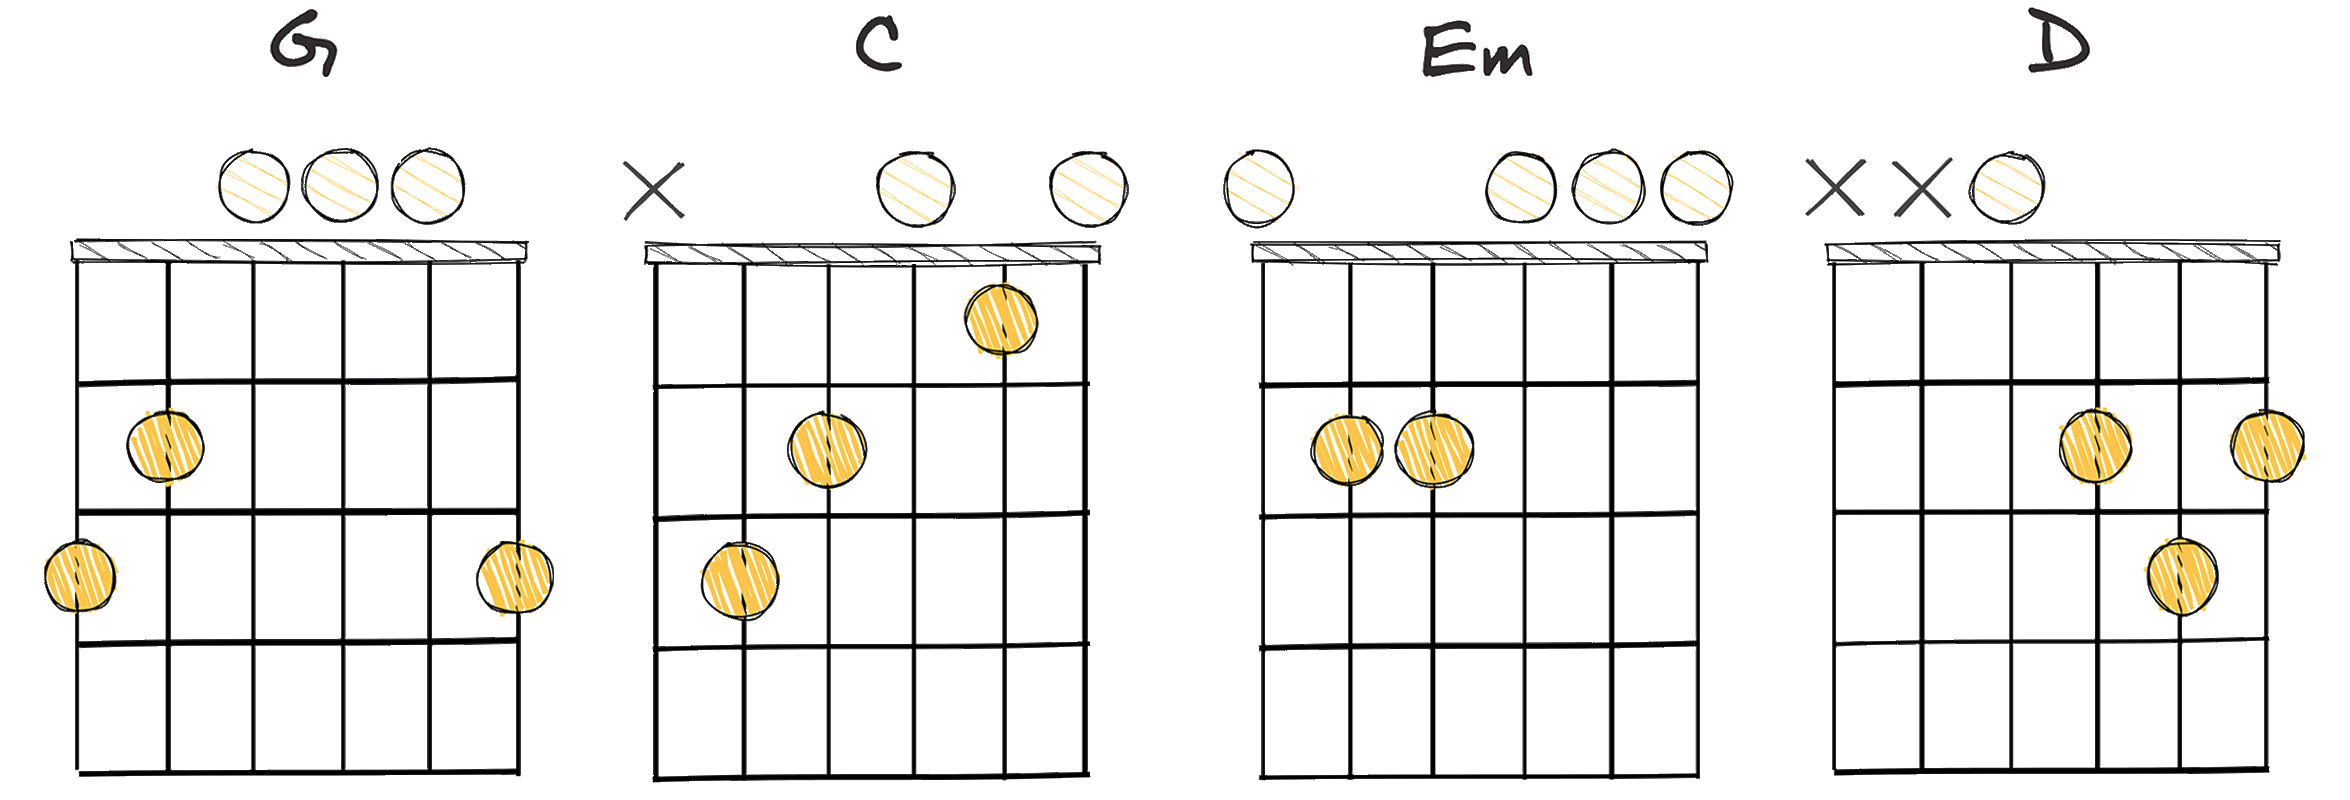 I-IV-vi-V (1-4-6-5) chords diagram